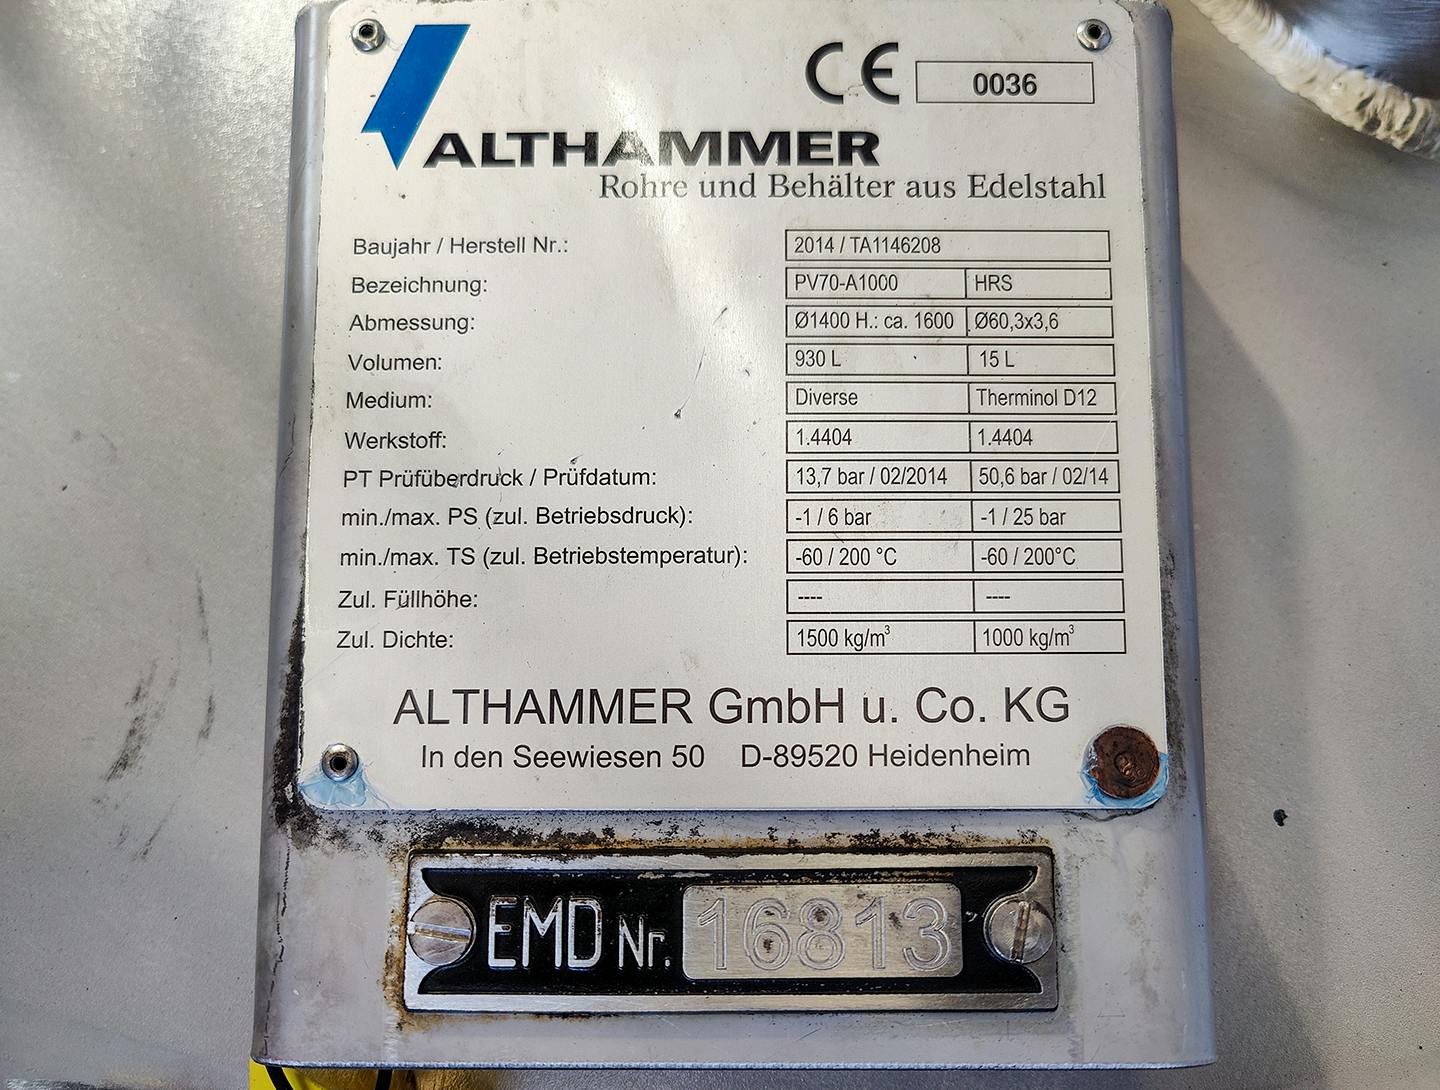 Althammer 500 Ltr. - Reactor de acero inoxidable - image 6